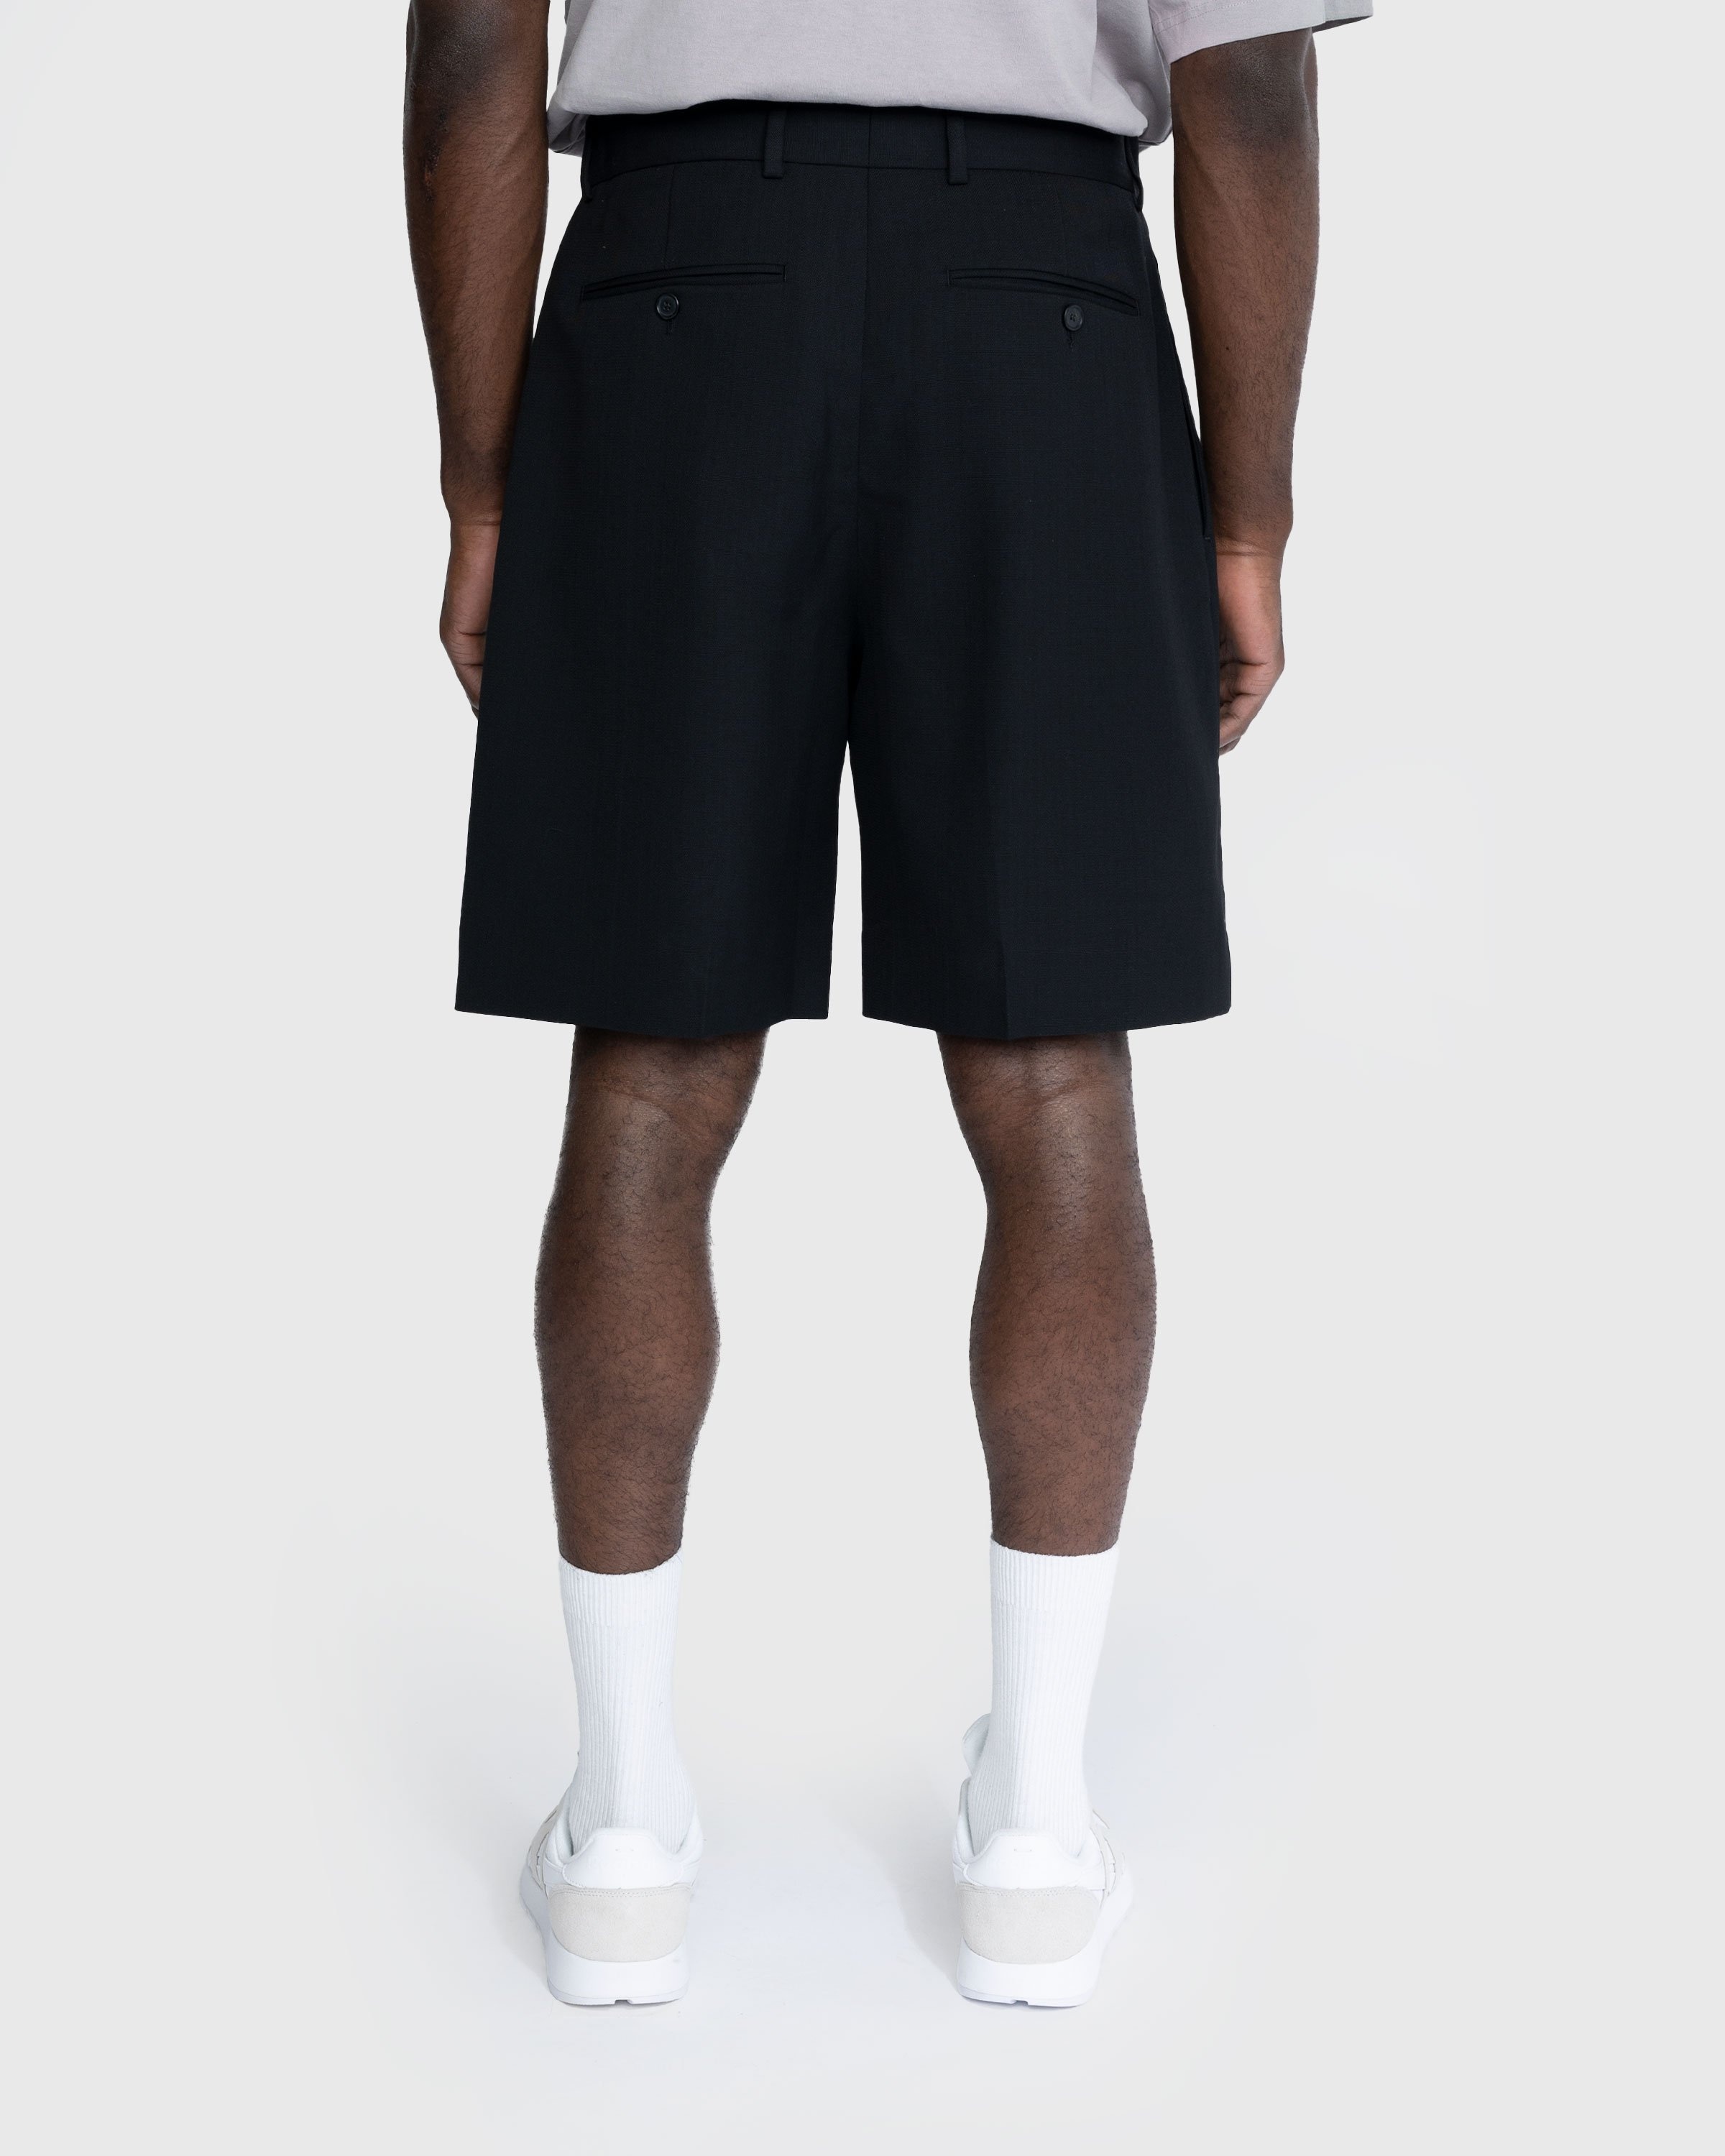 Acne Studios – Tailored Pleated Shorts Black - Bermuda Cuts - Black - Image 3